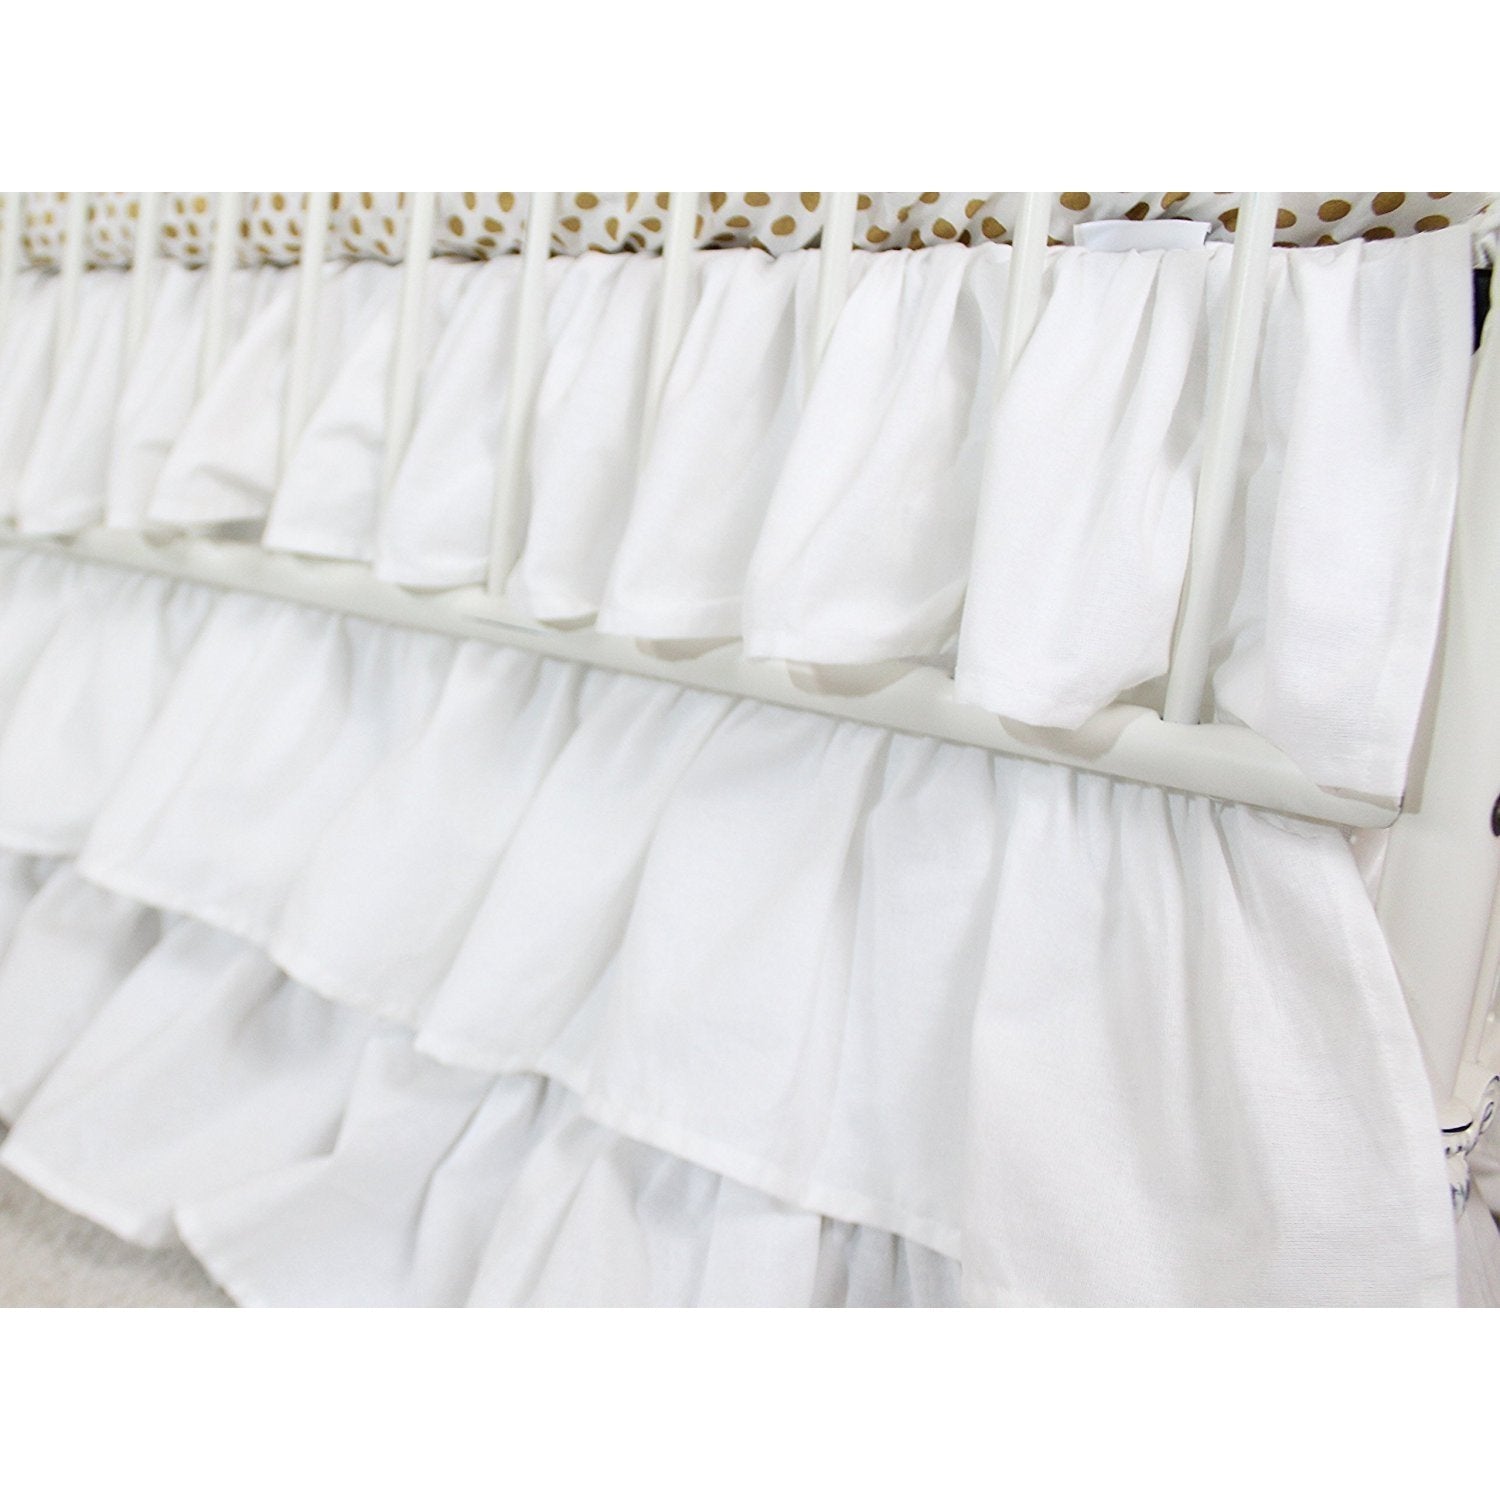 Waterfall Ruffle 3 Tier Skirt | White Cloud Nursery-Crib Skirt-Default-Jack and Jill Boutique